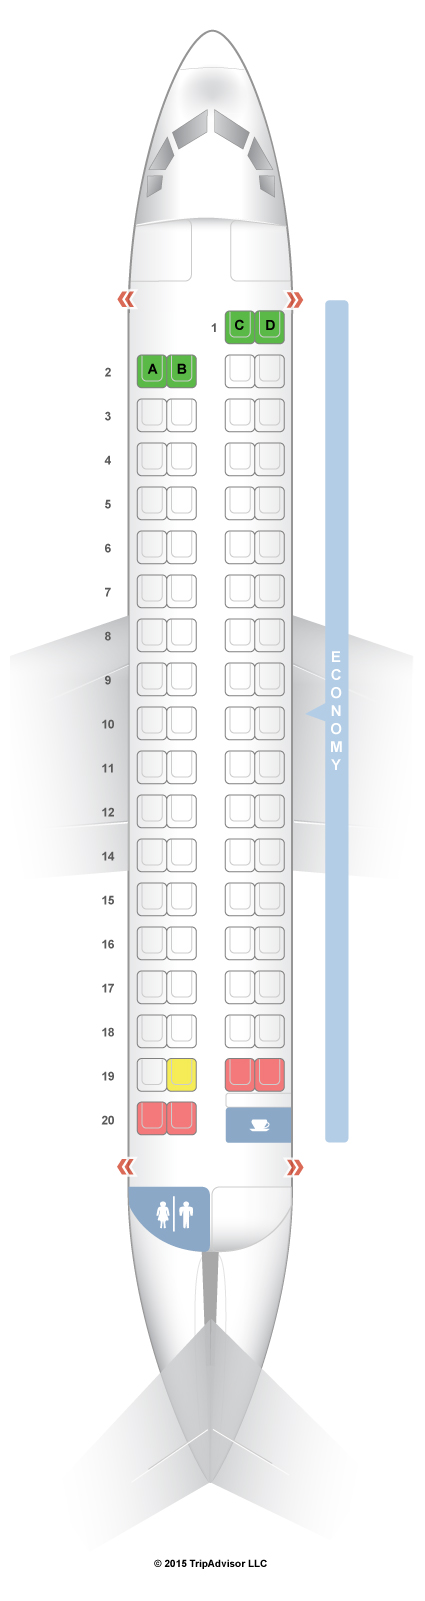 Cebu Pacific Seating Chart